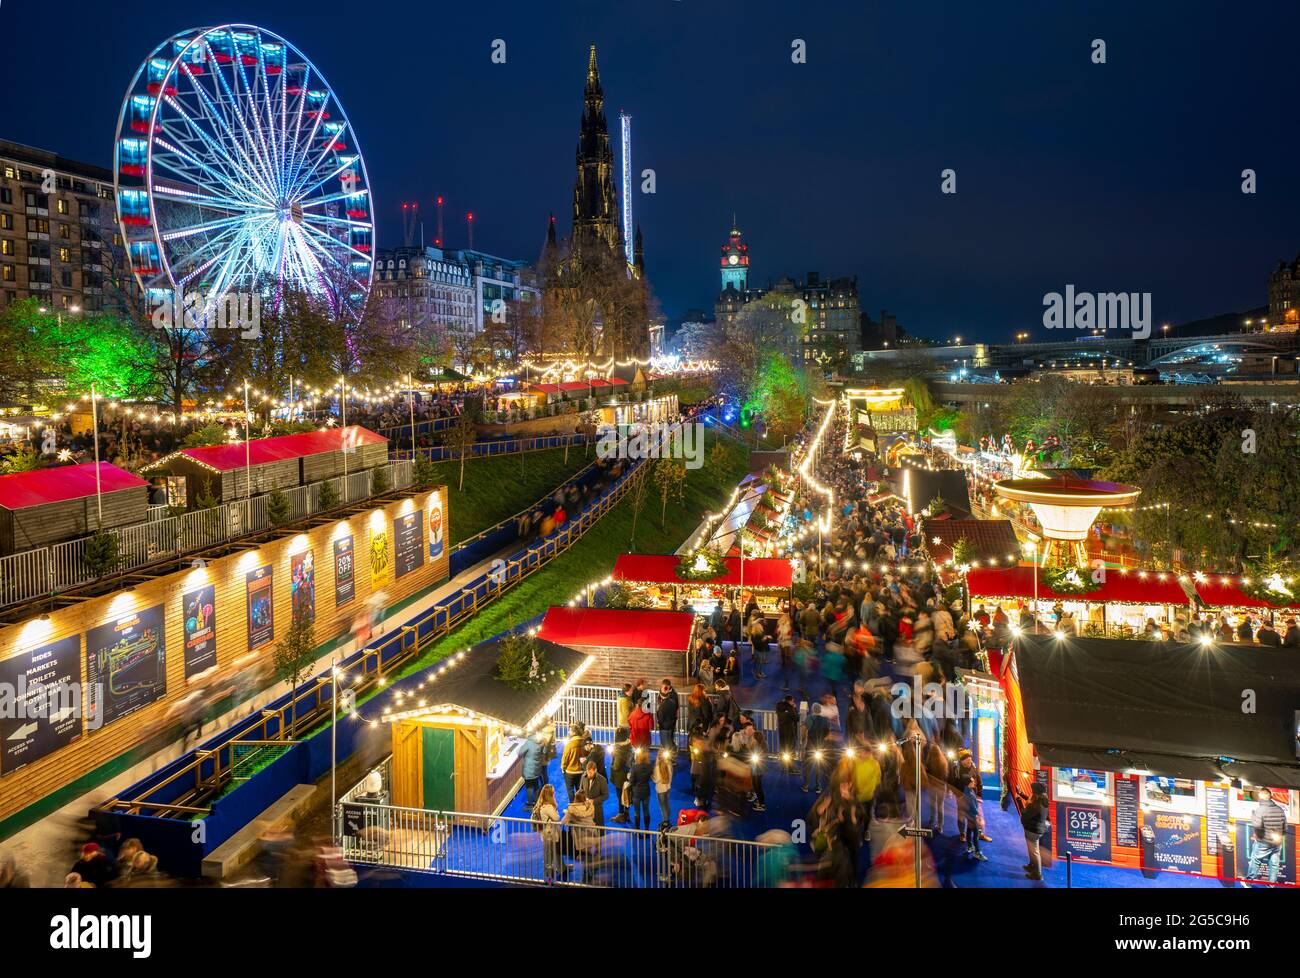 Night view of the opening evening of the annual Edinburgh Christmas Market in East Princes Street Gardens, Edinburgh, Scotland, UK Stock Photo